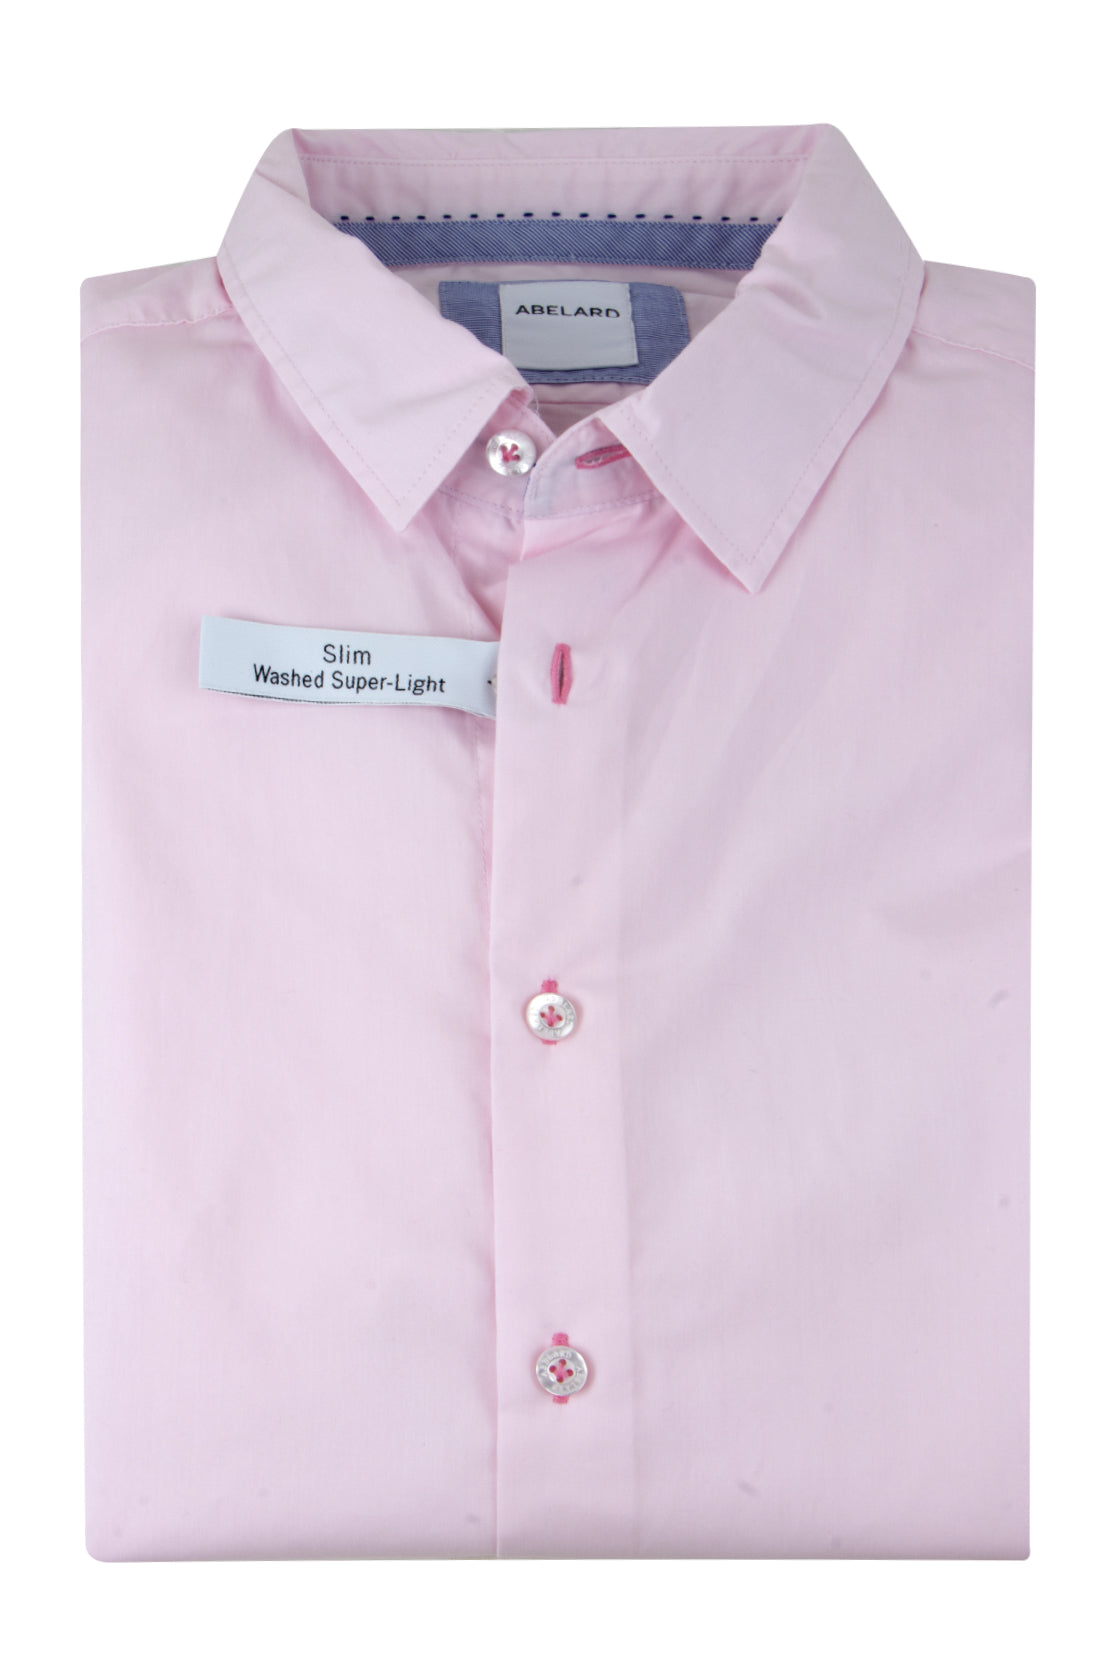 Abelard Washed Super Light Shirt Pink